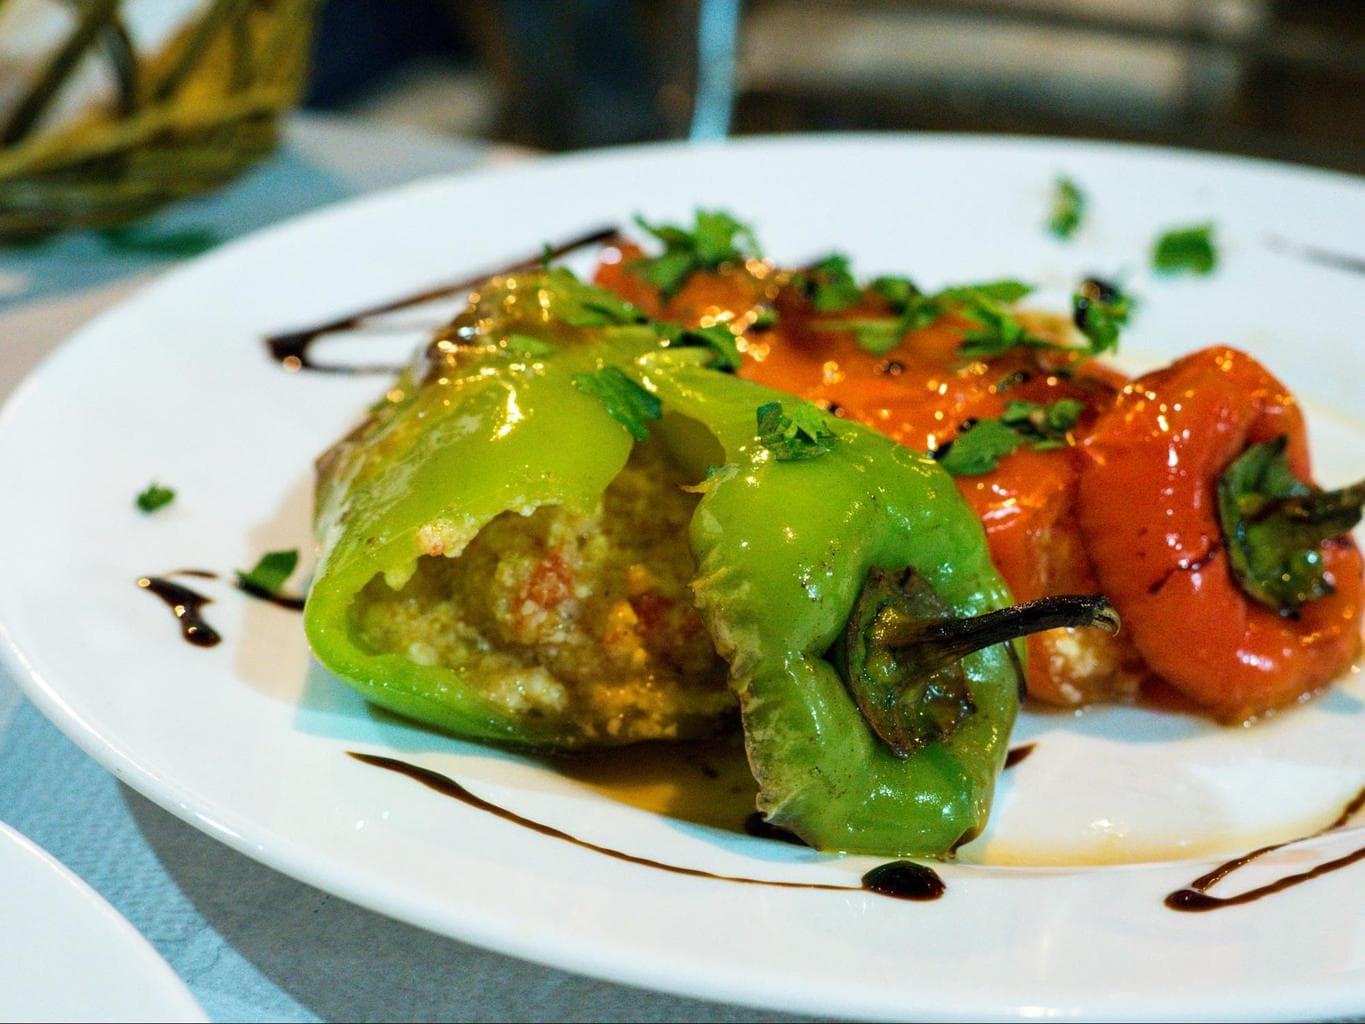 Stuffed peppers in Albania